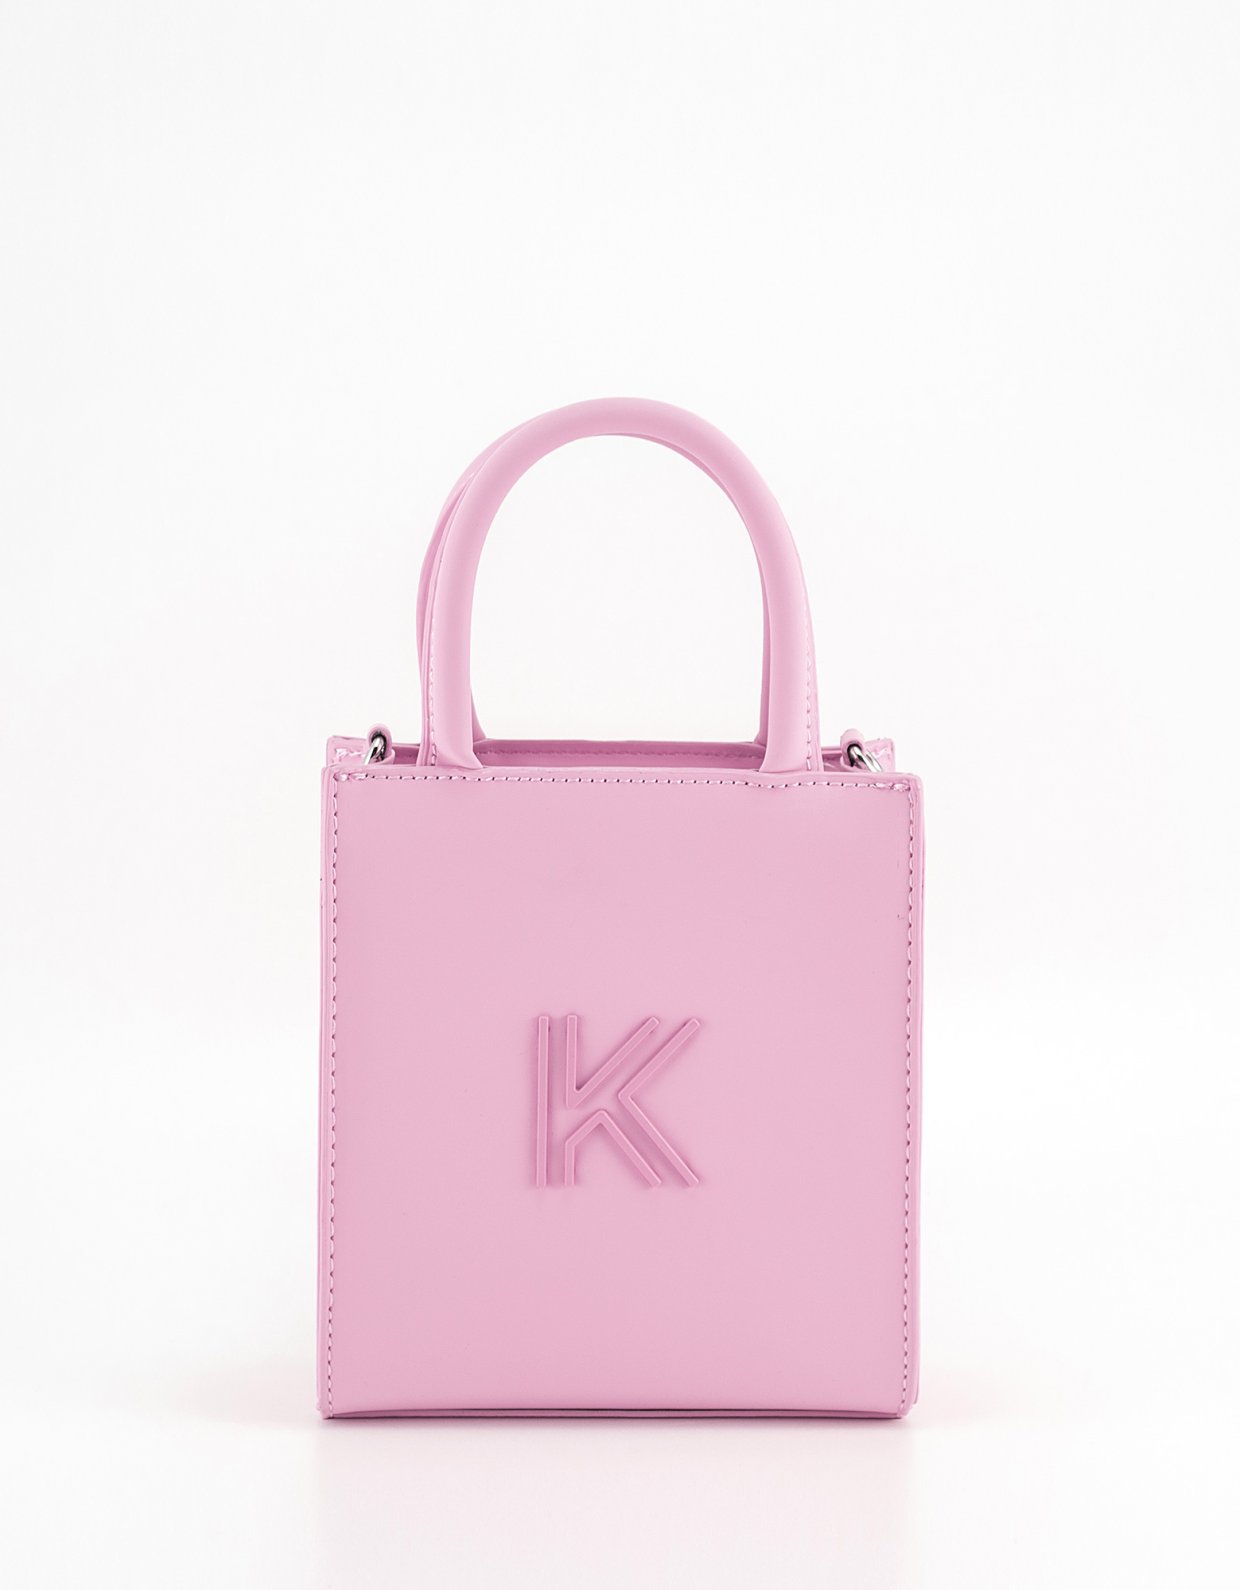 Kendall + Kylie Switzerland tote bag pink